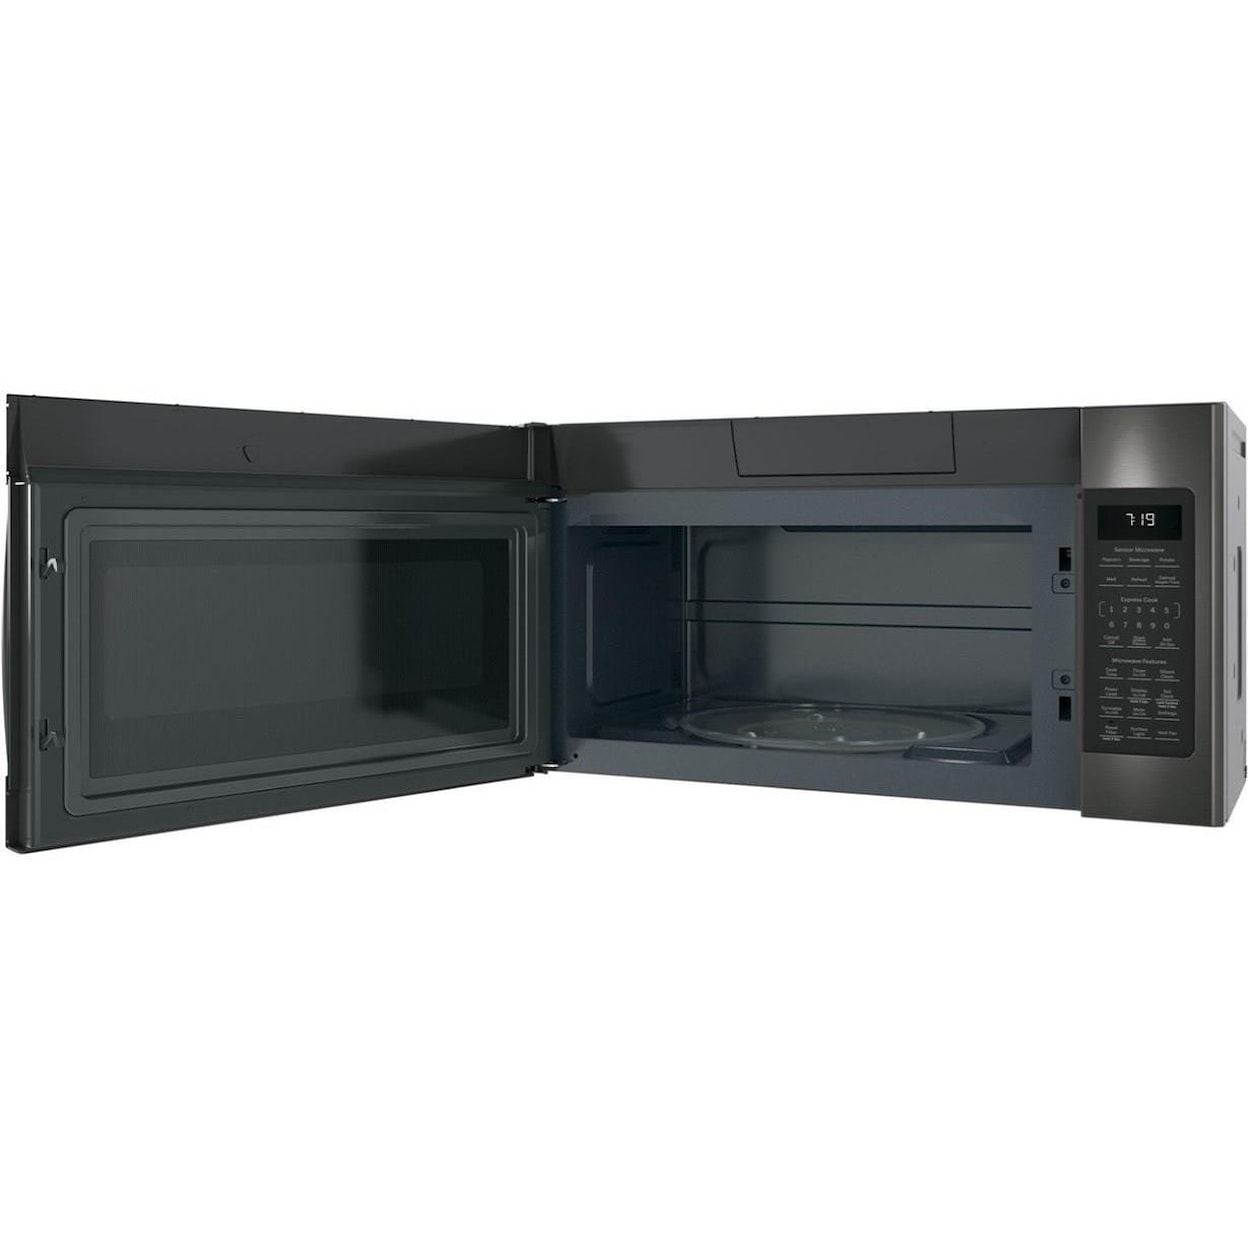 GE Appliances GE Microwaves GE® Series 1.9 Cu. Ft. Over-the-Range Sensor